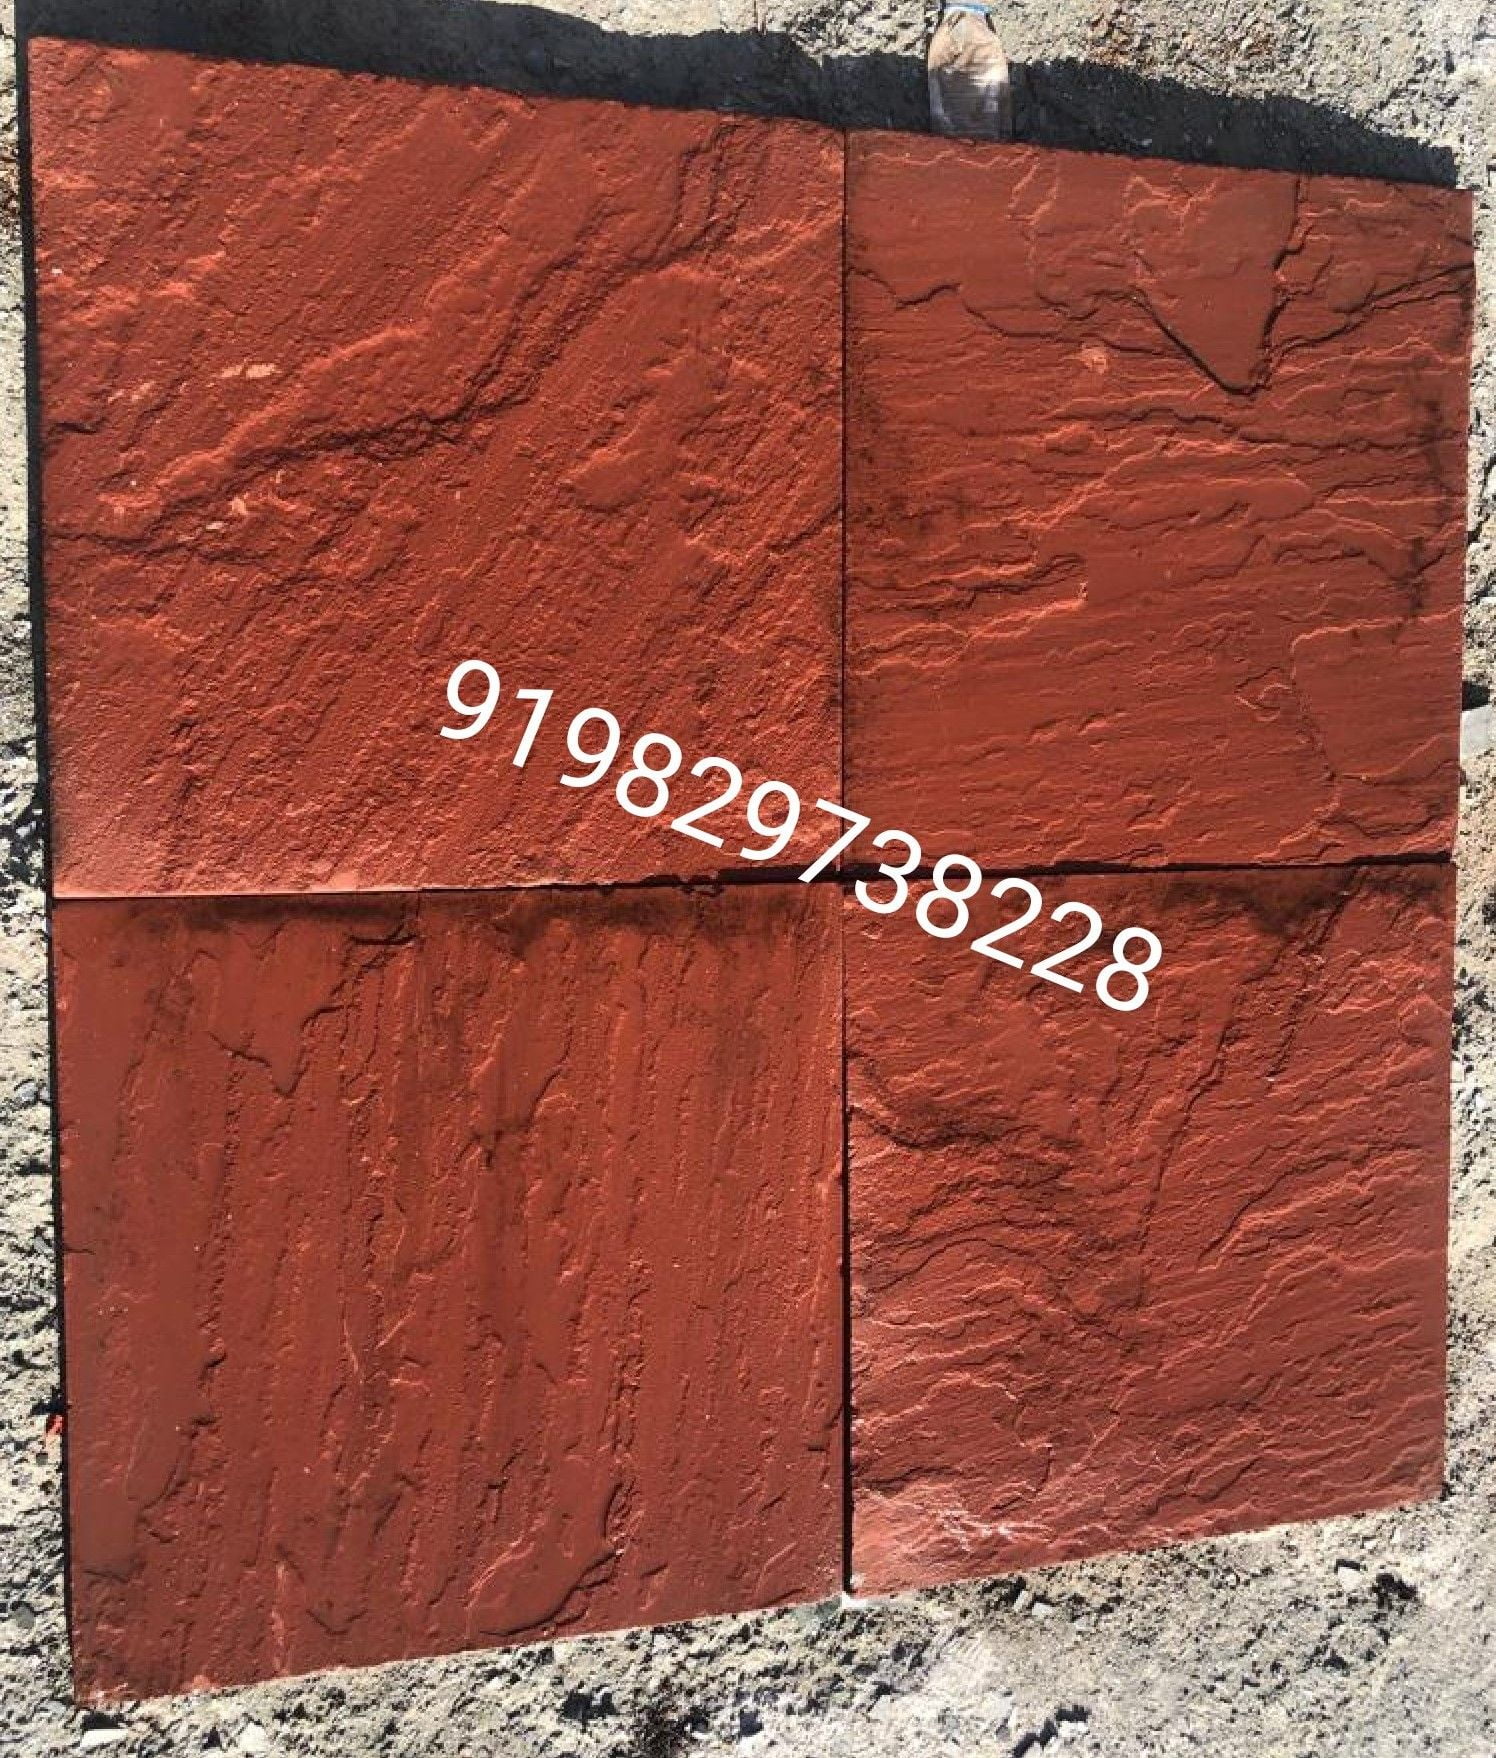 red sandstone